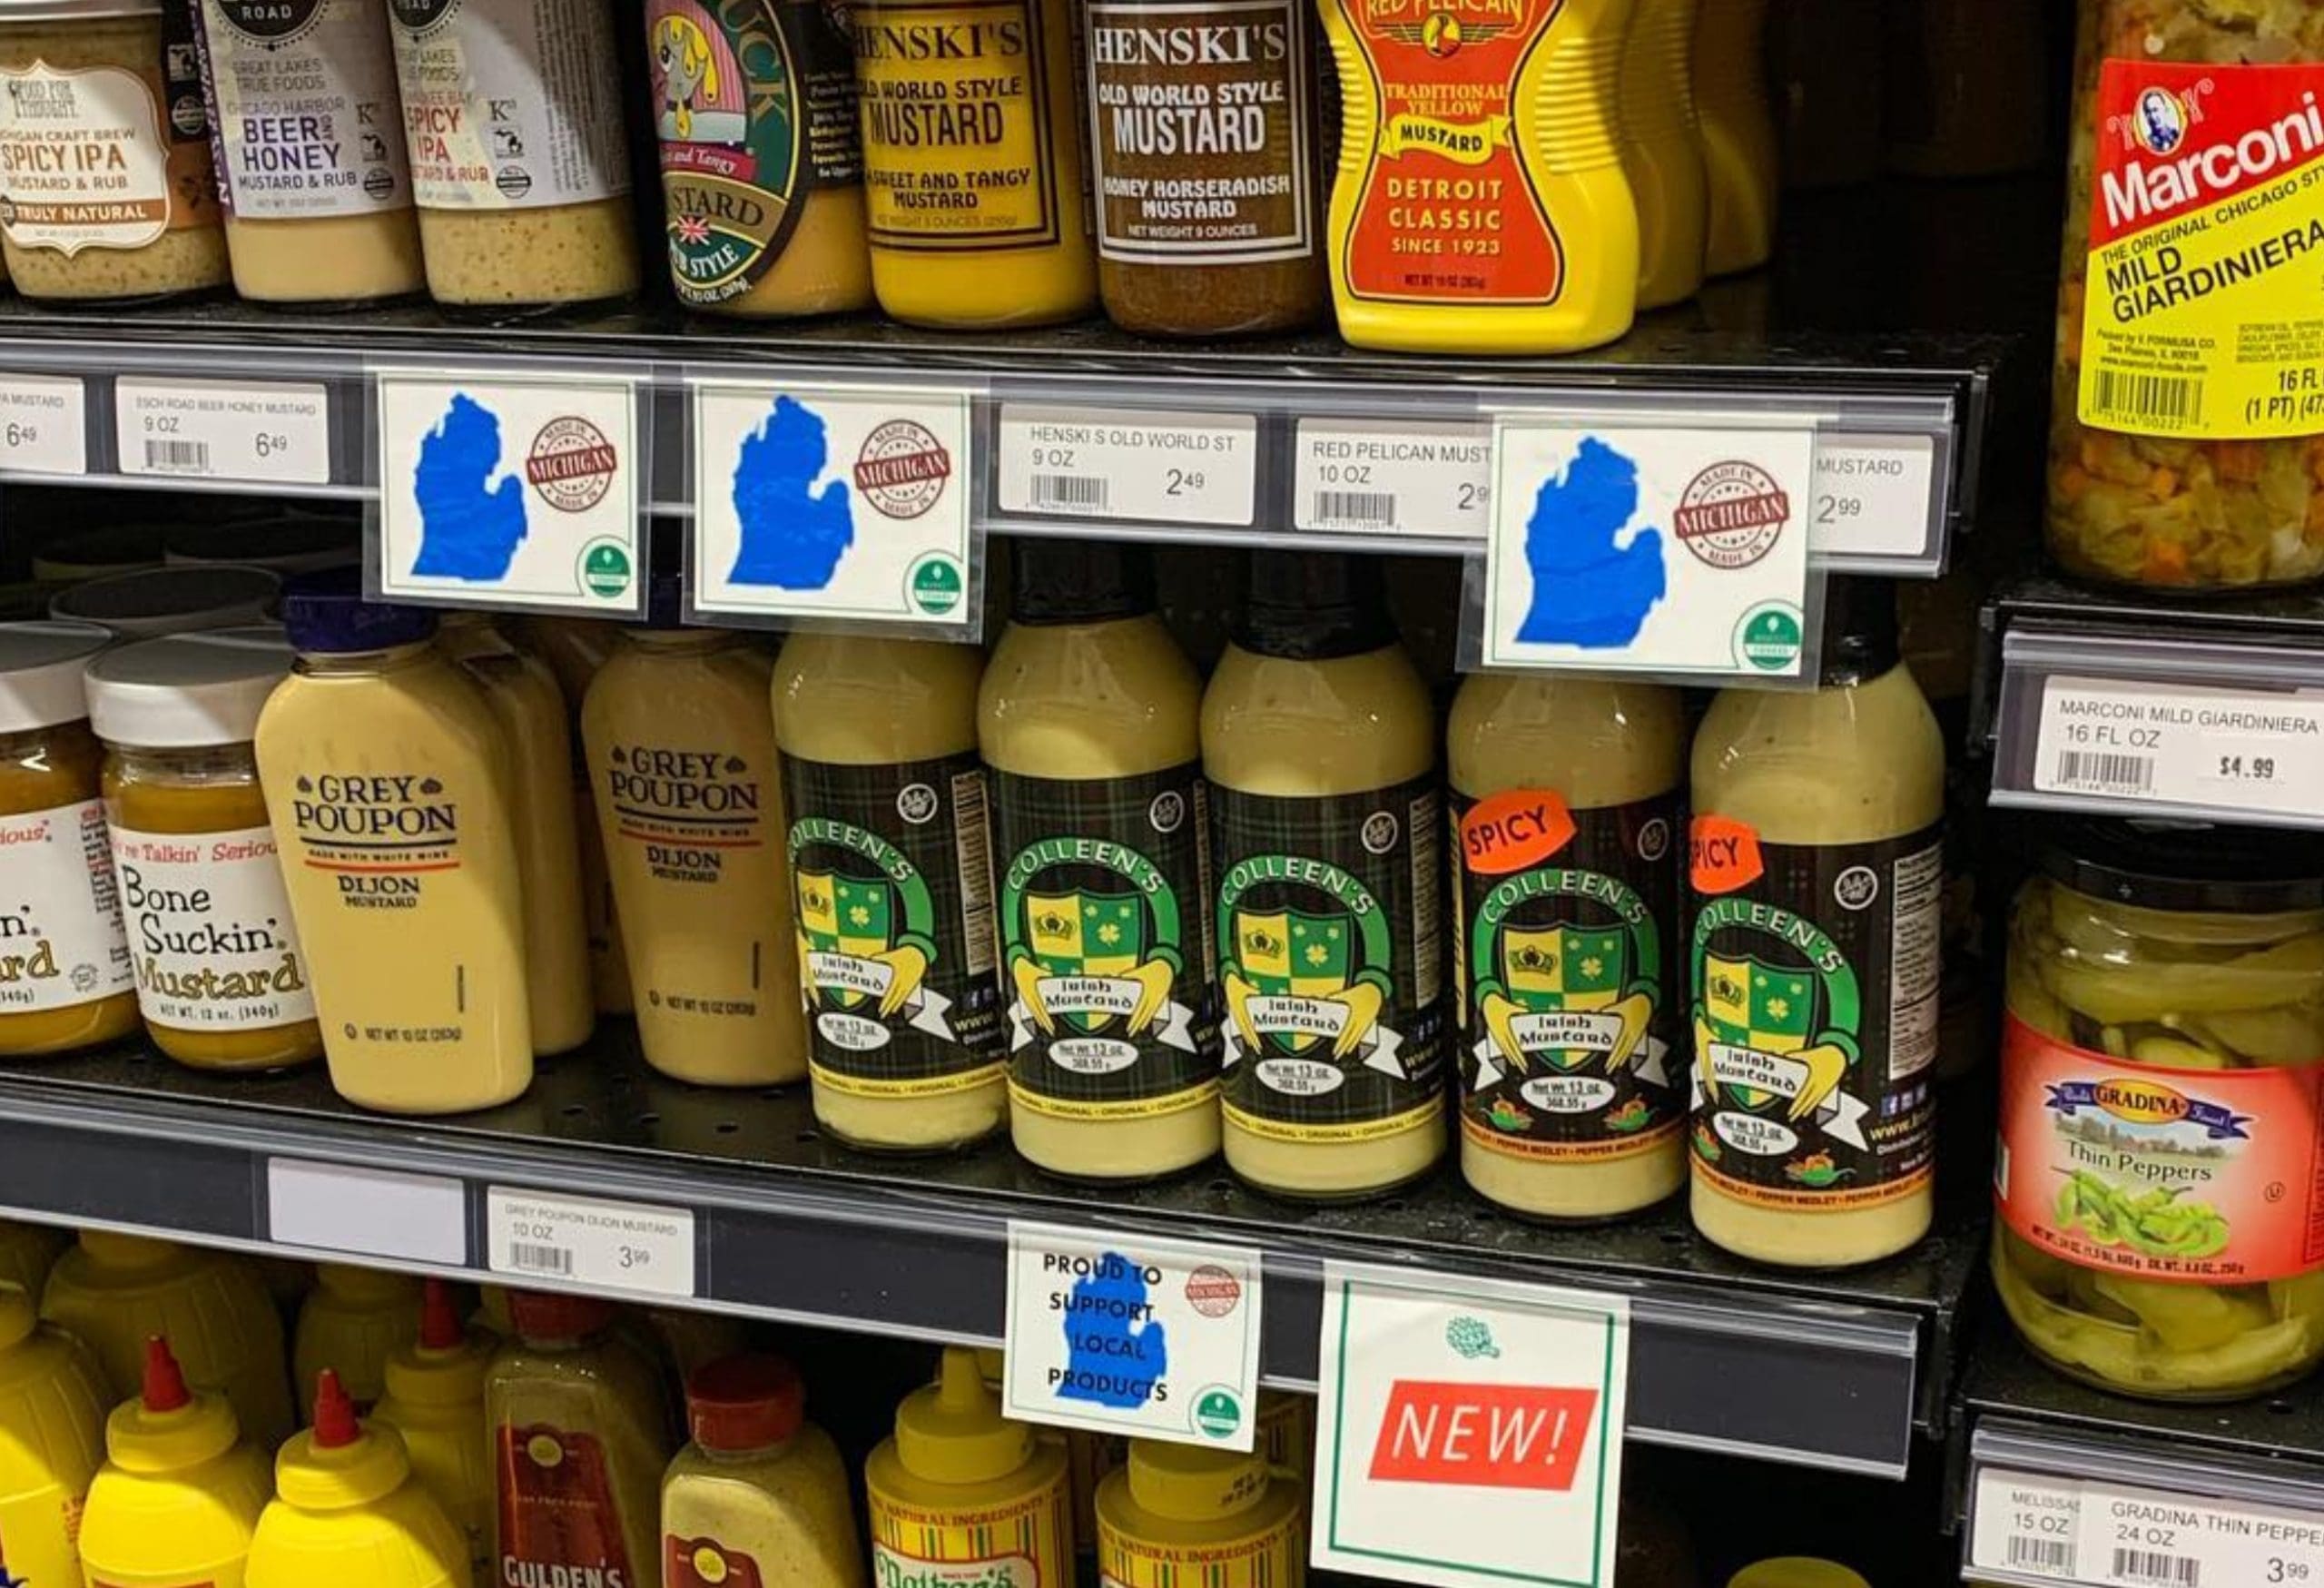 Colleens Irish Mustard - Mustard Label 06